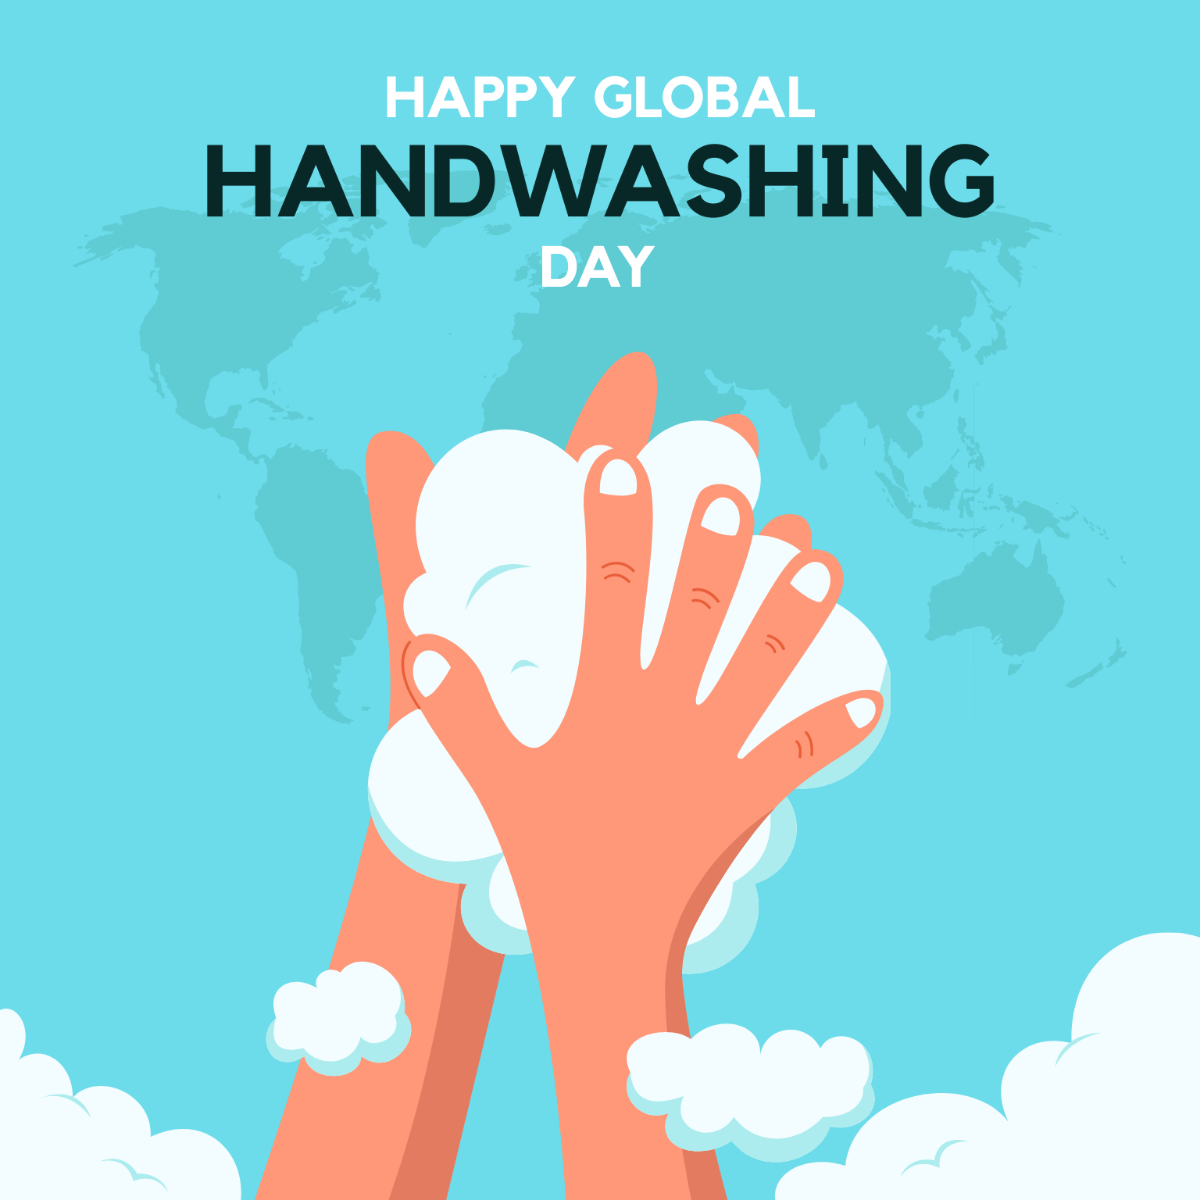 Happy Global Handwashing Day Illustration